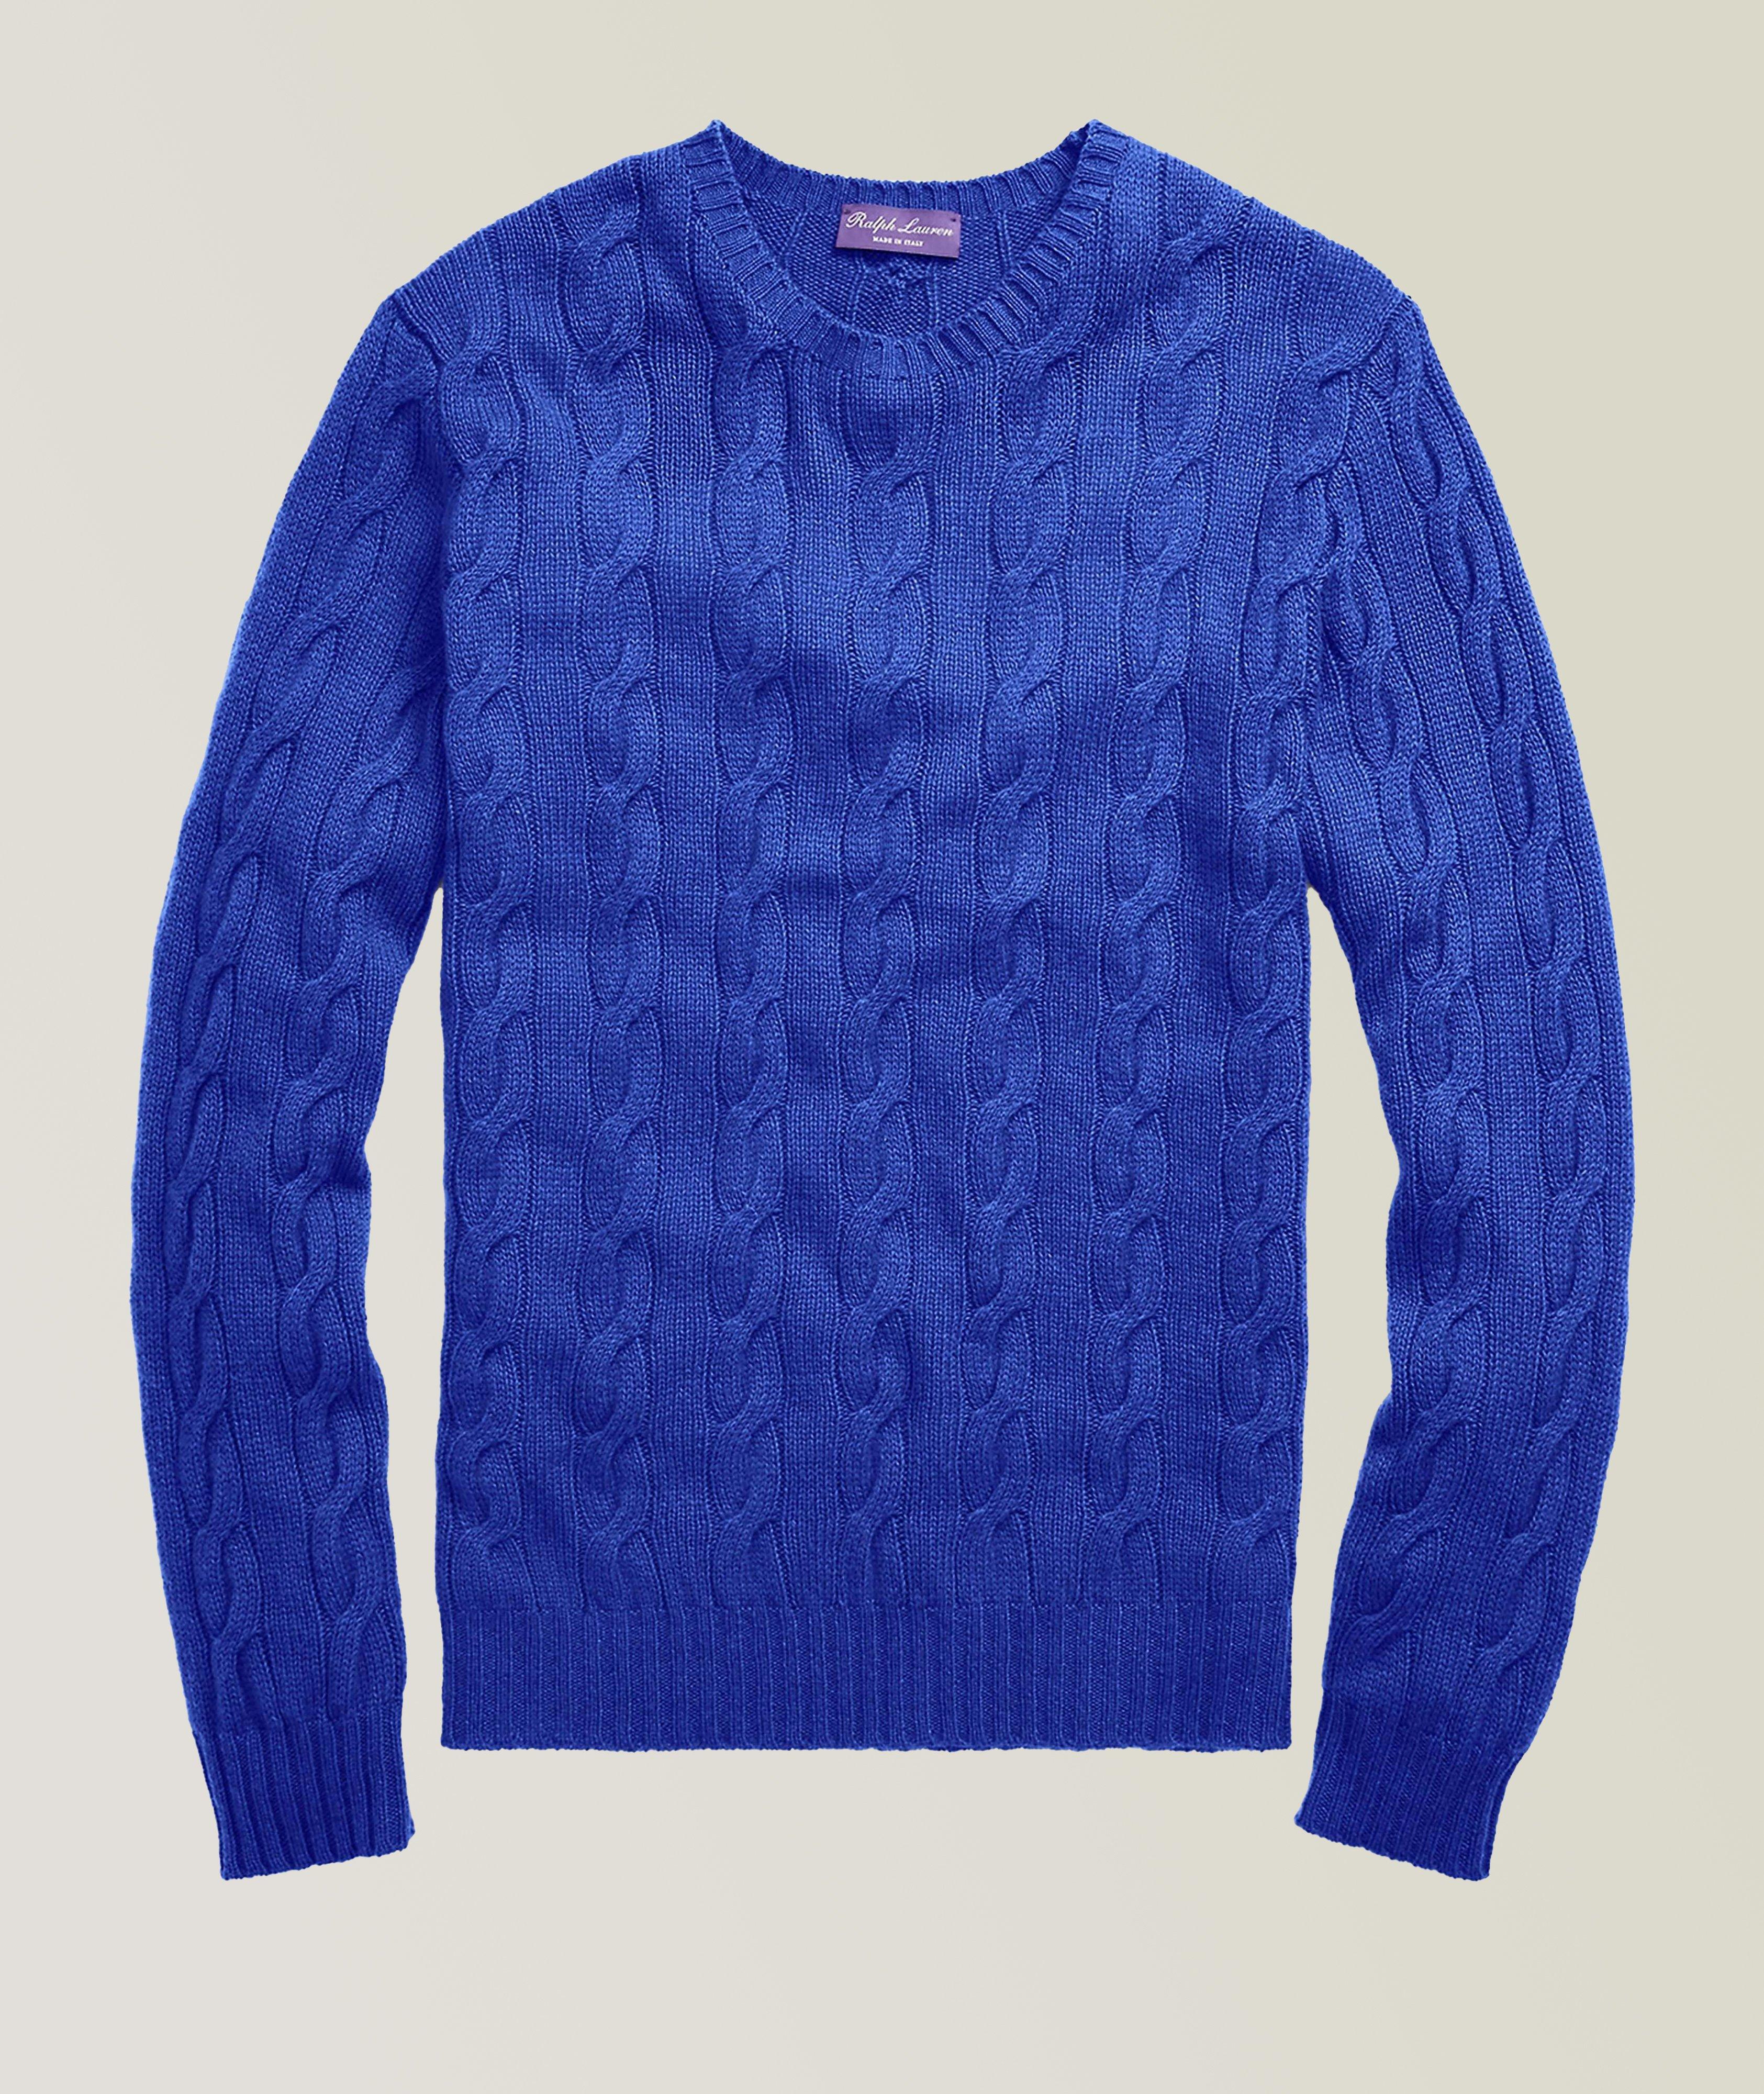 Ralph Lauren Purple Label Cable-Knit Cashmere Sweater | Sweaters ...